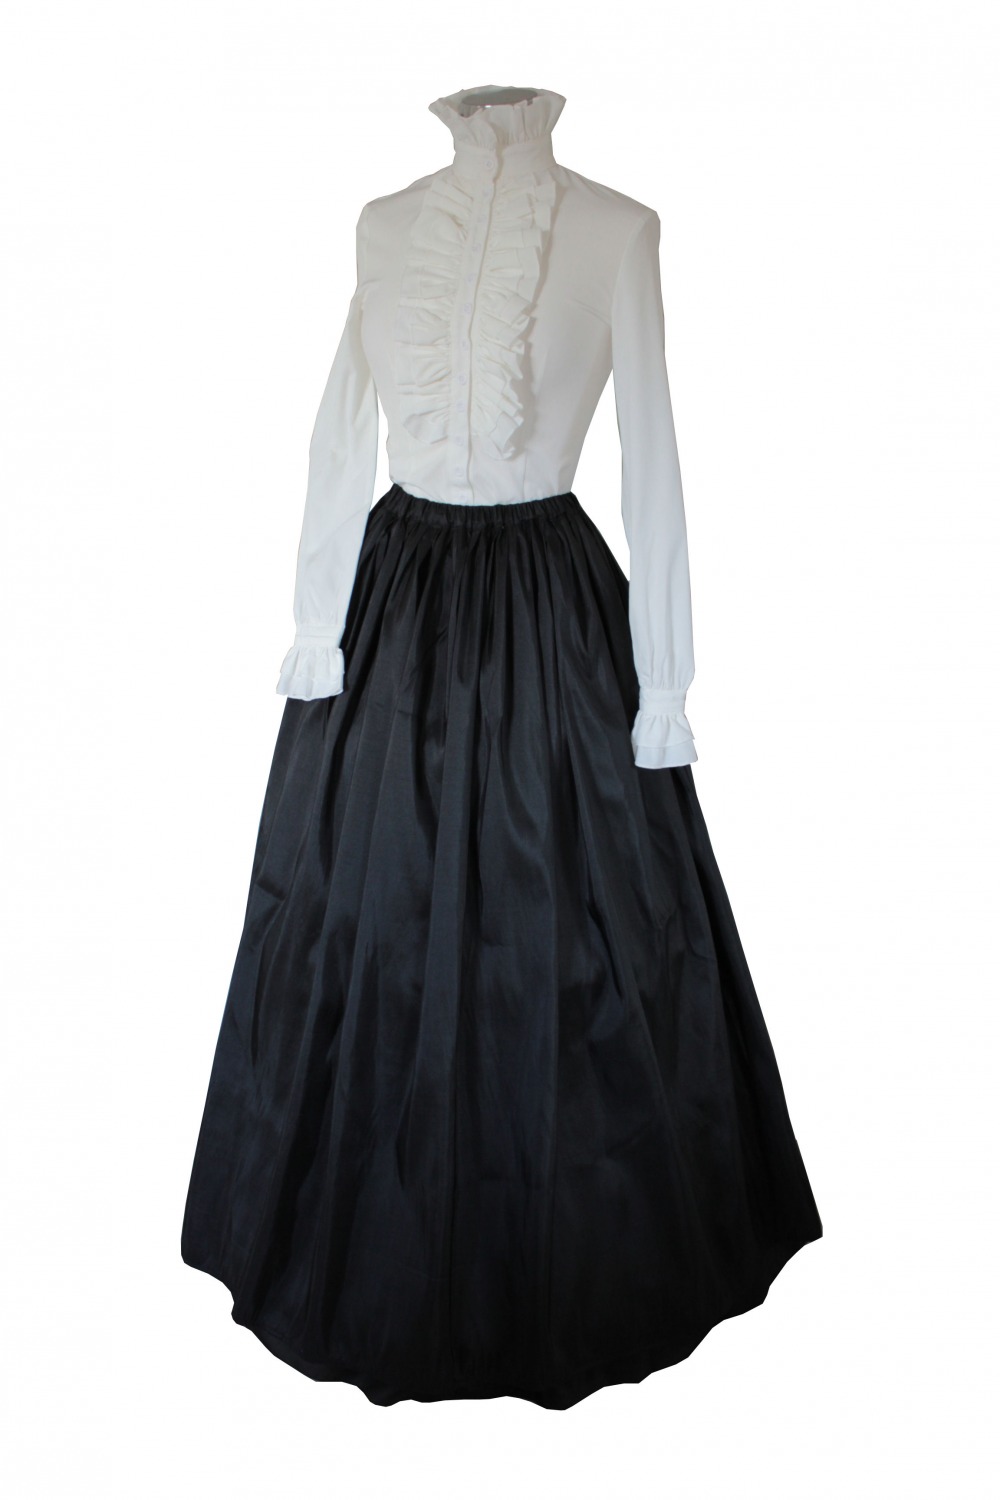 Ladies Victorian Carol Singer School Mistress Costume and Bonnet Size 6 - 8 Image